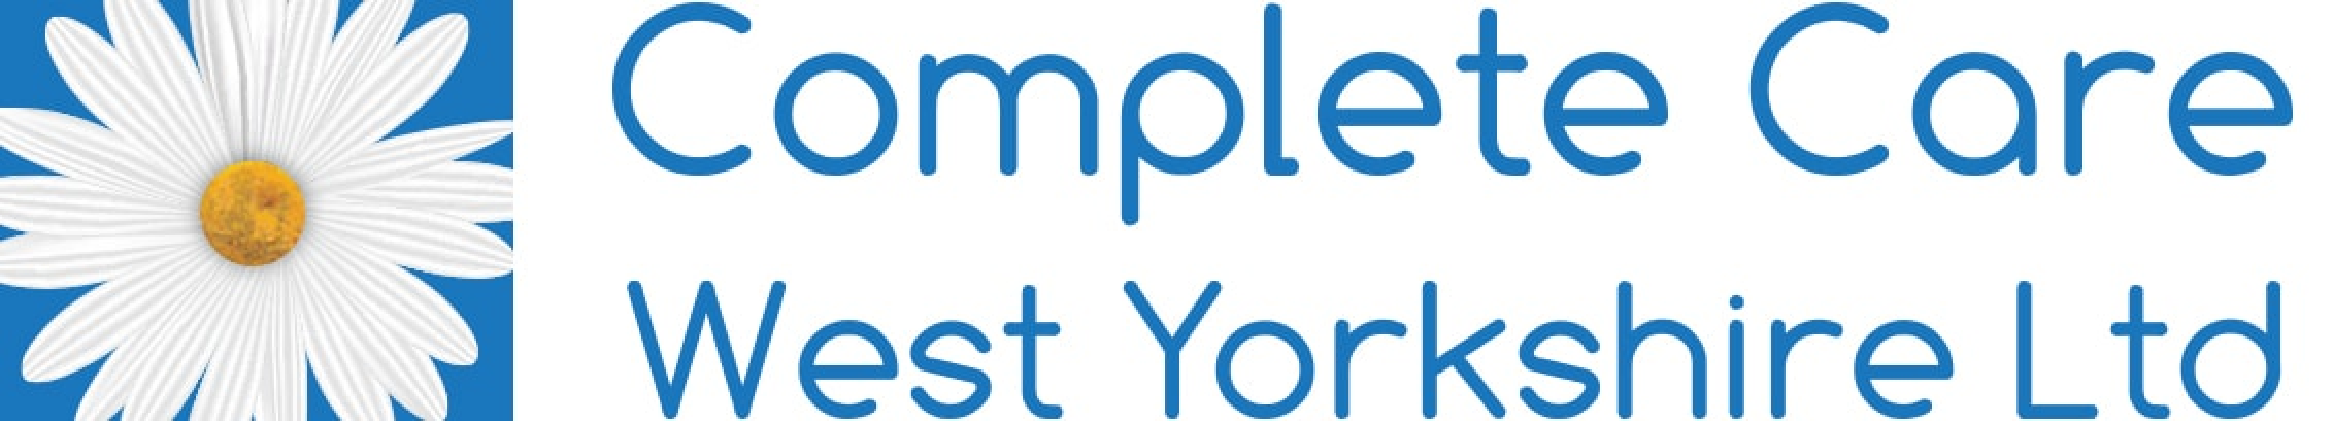 logo for Complete Care West Yorkshire Ltd